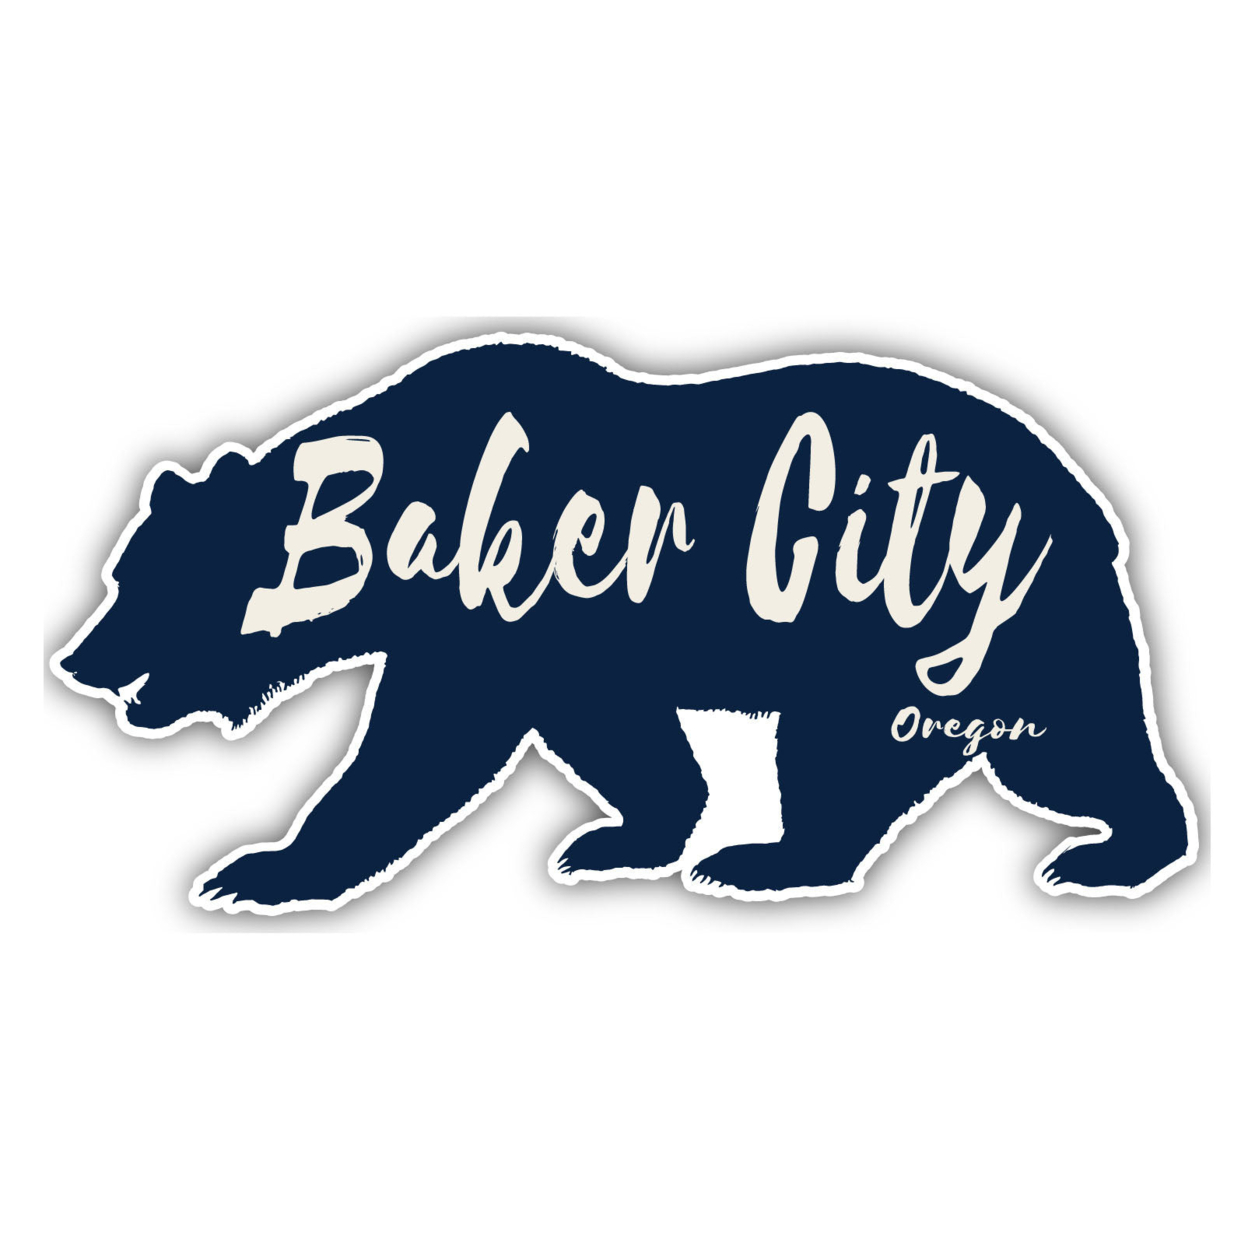 Baker City Oregon Souvenir Decorative Stickers (Choose Theme And Size) - 4-Pack, 12-Inch, Tent